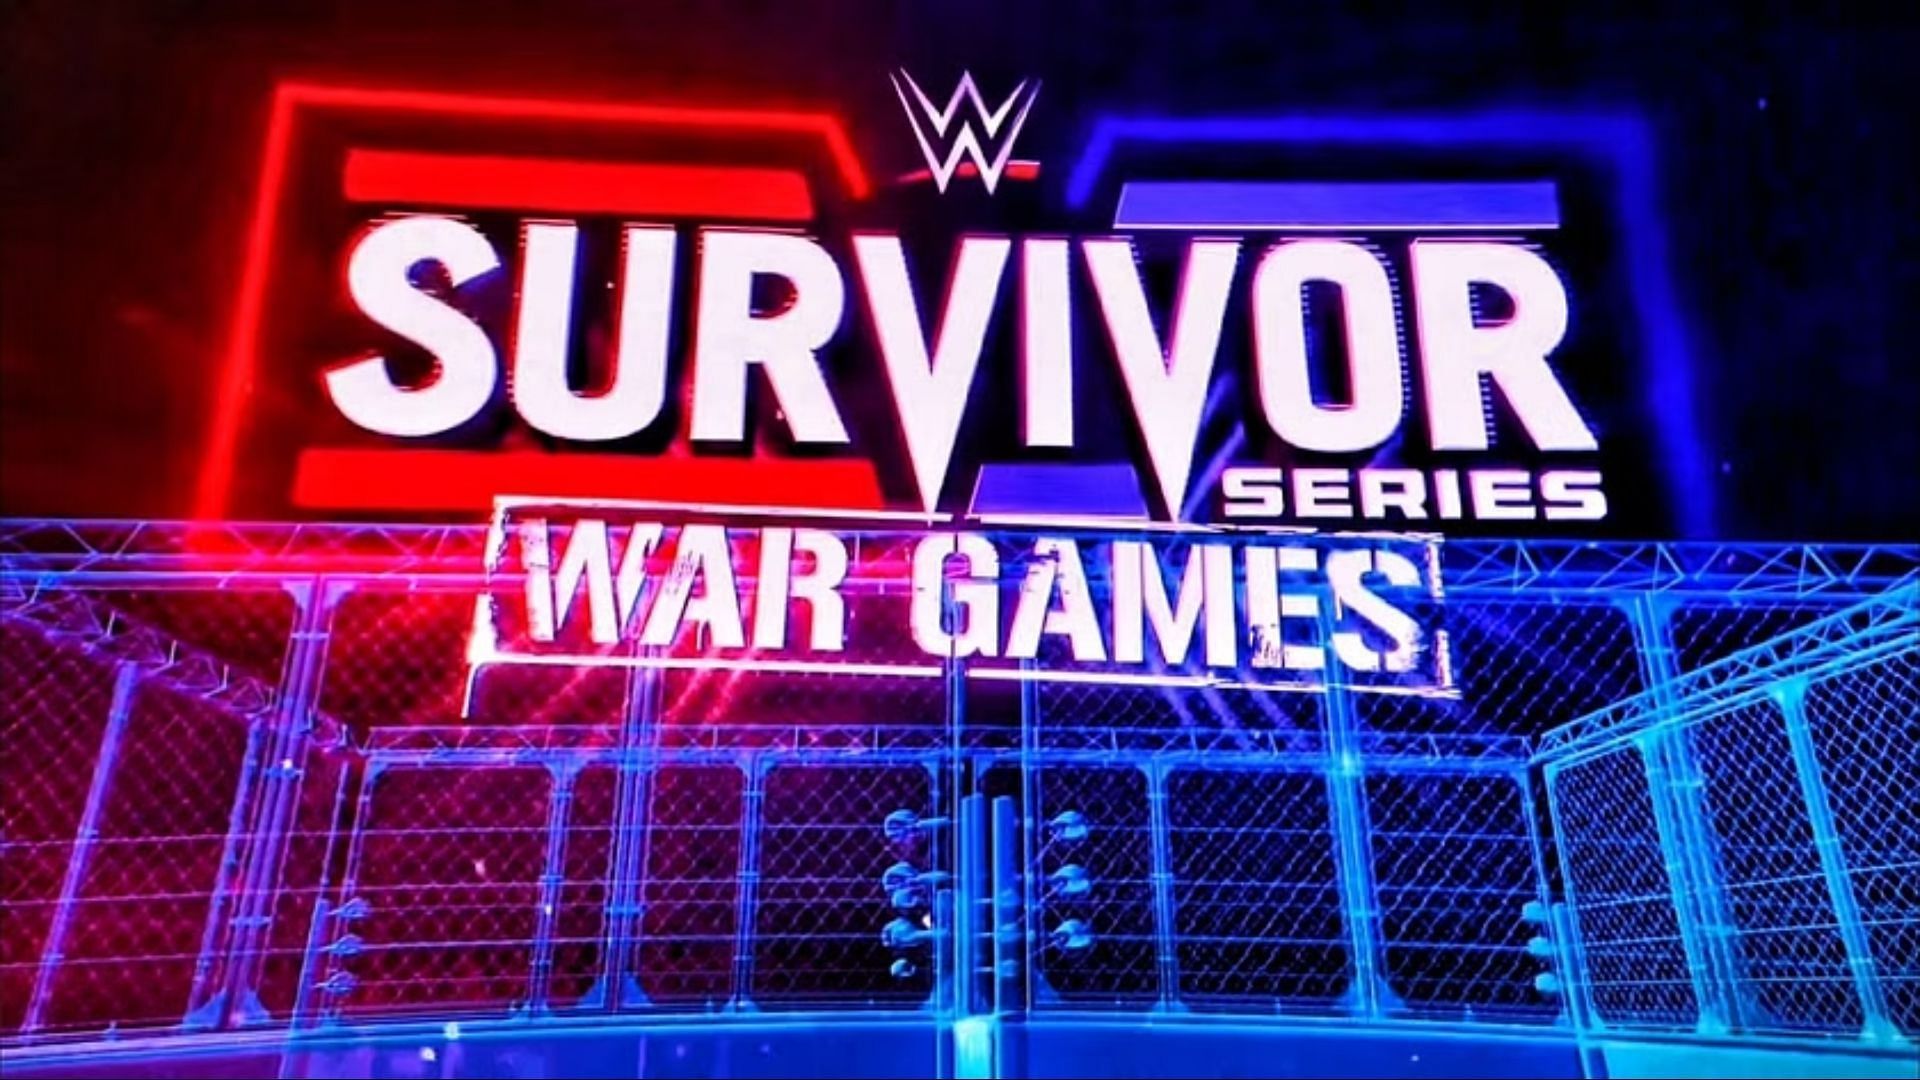 WWE Survivor Series will happen in Chicago this year!